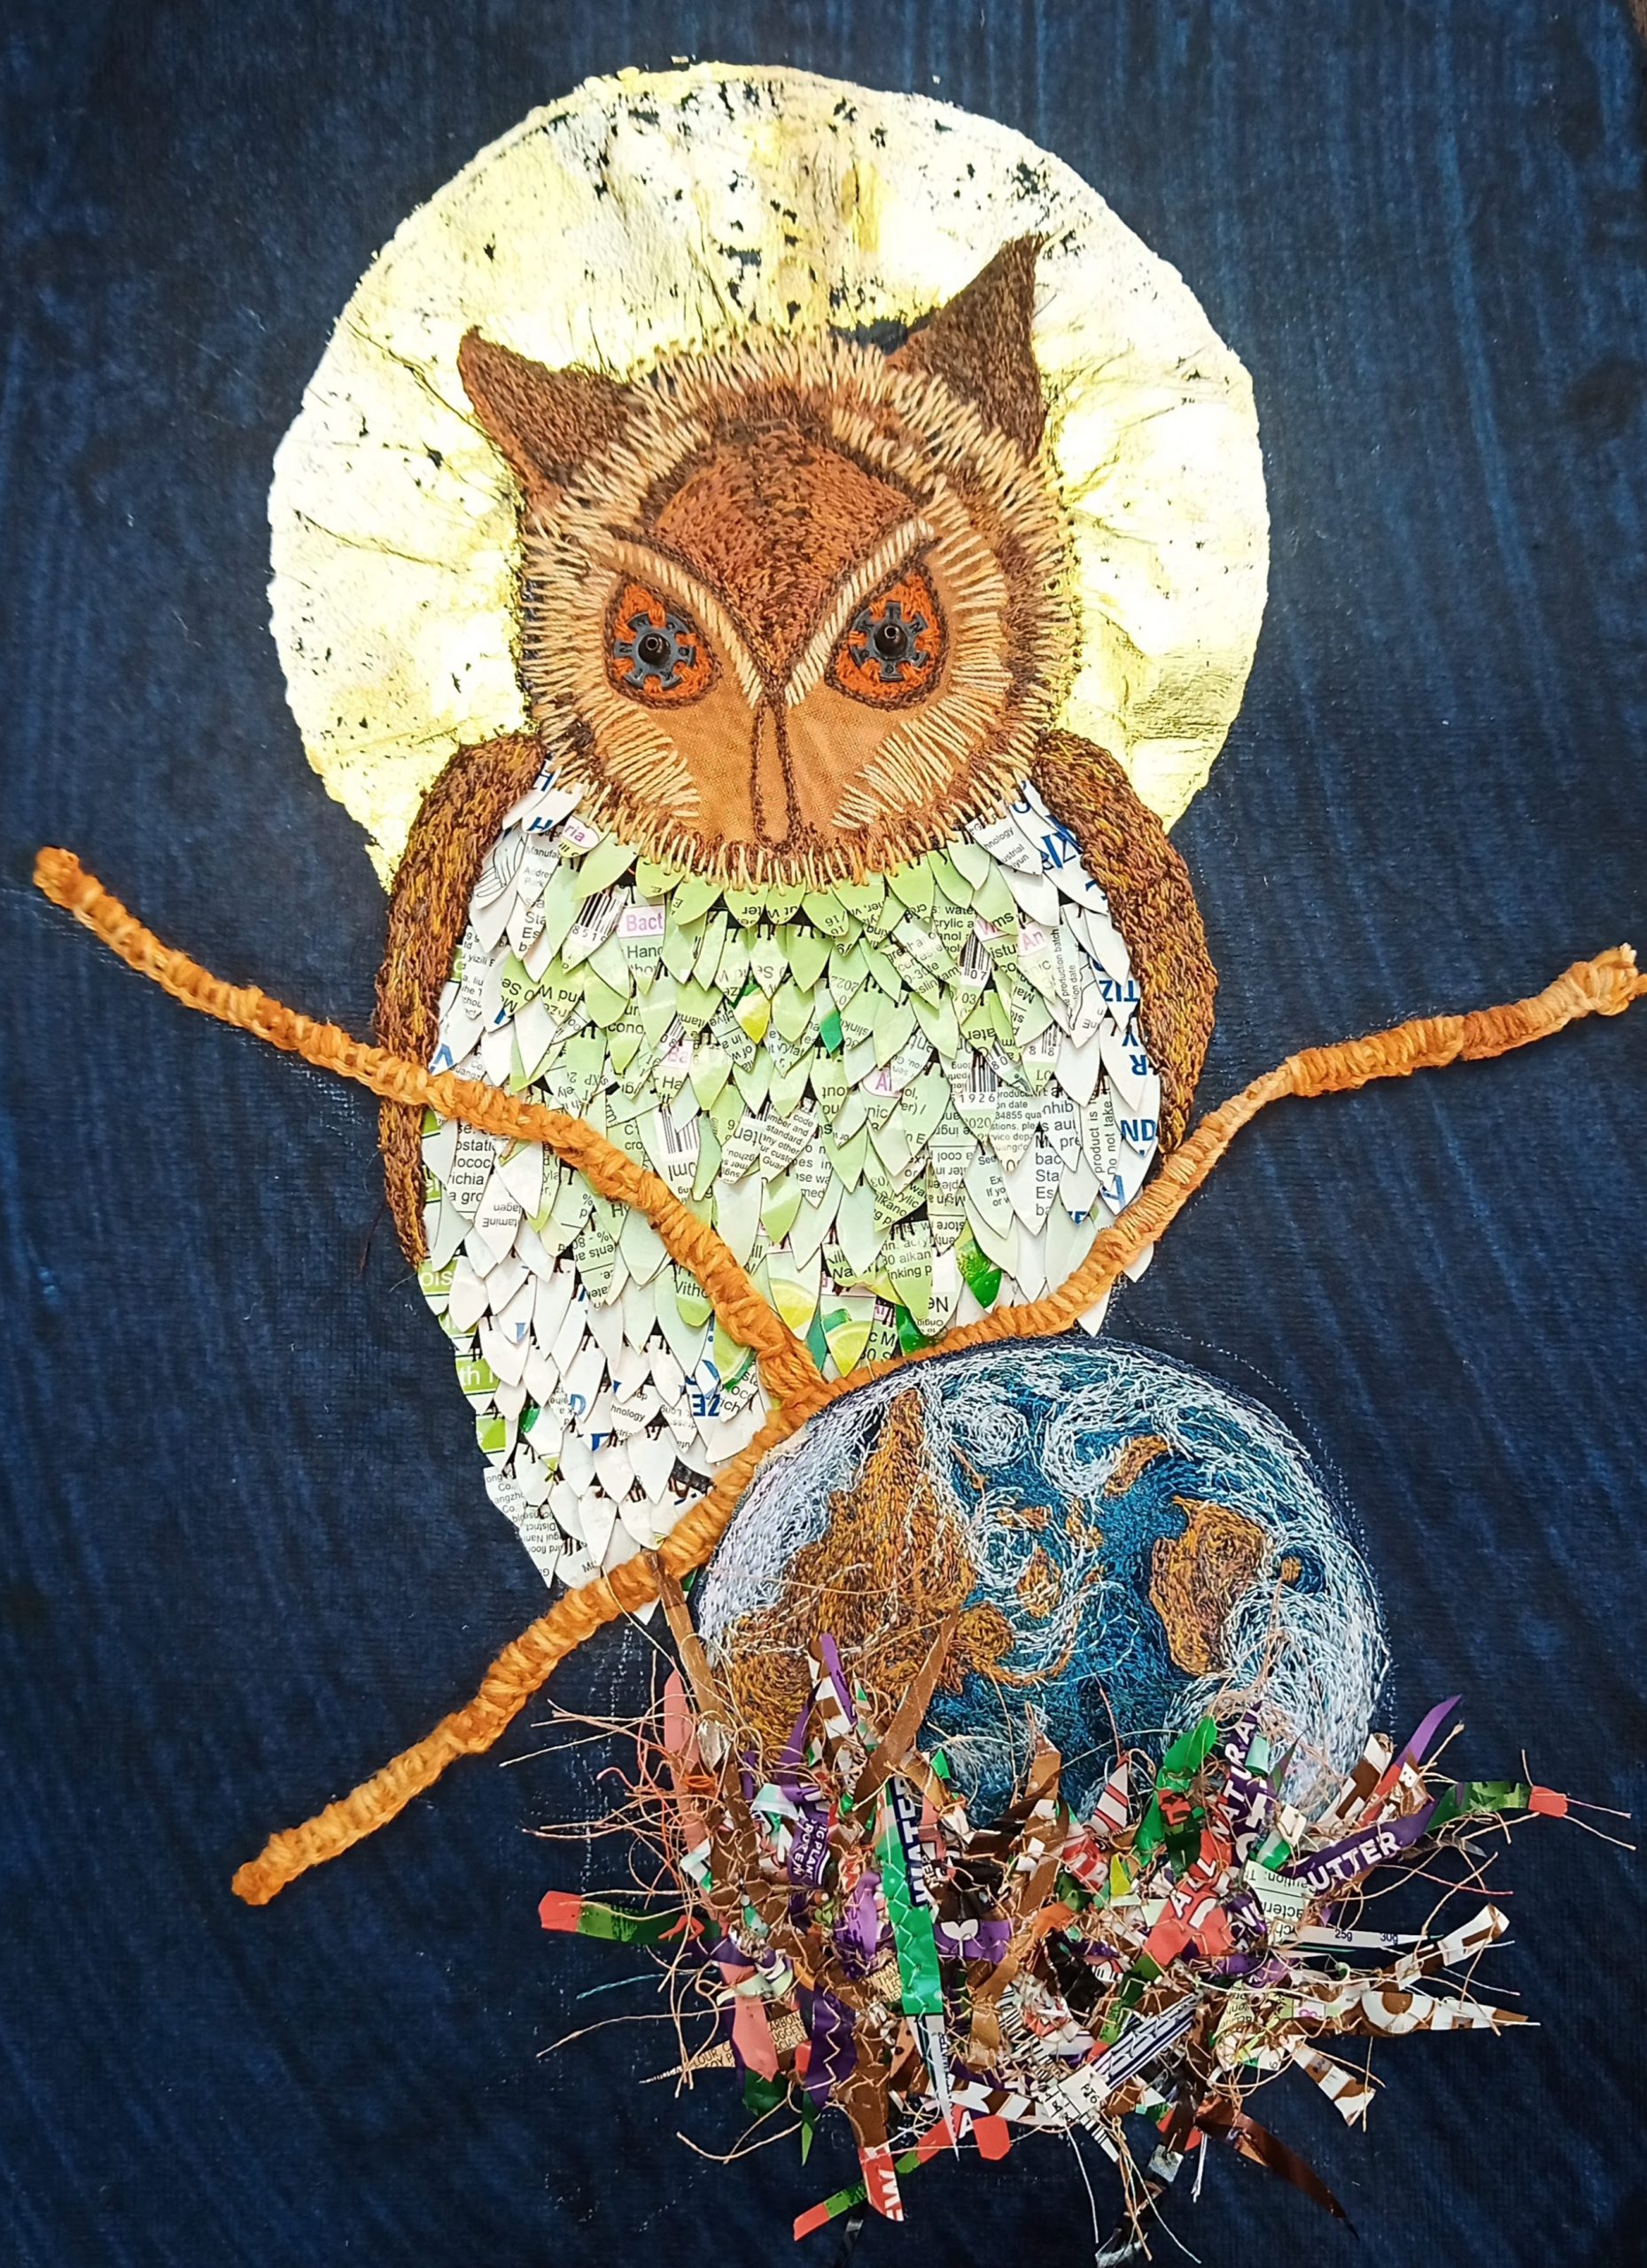 (158) Samantha Harvey - David Attenborough Owl Keeps Guard Image